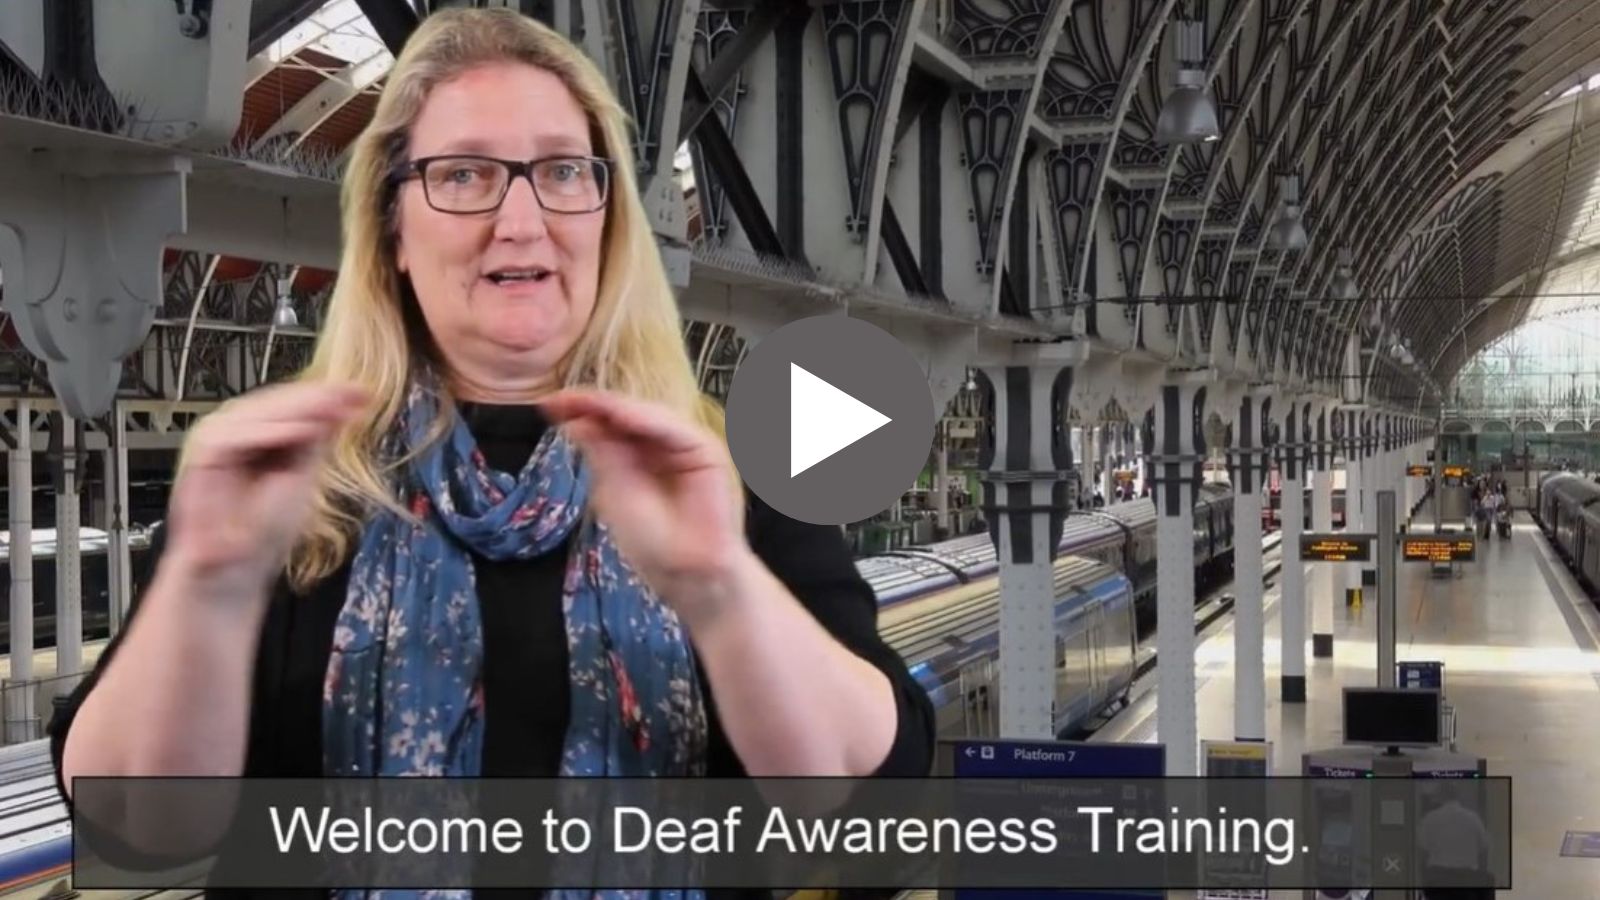 Deaf Awareness training for railway staff